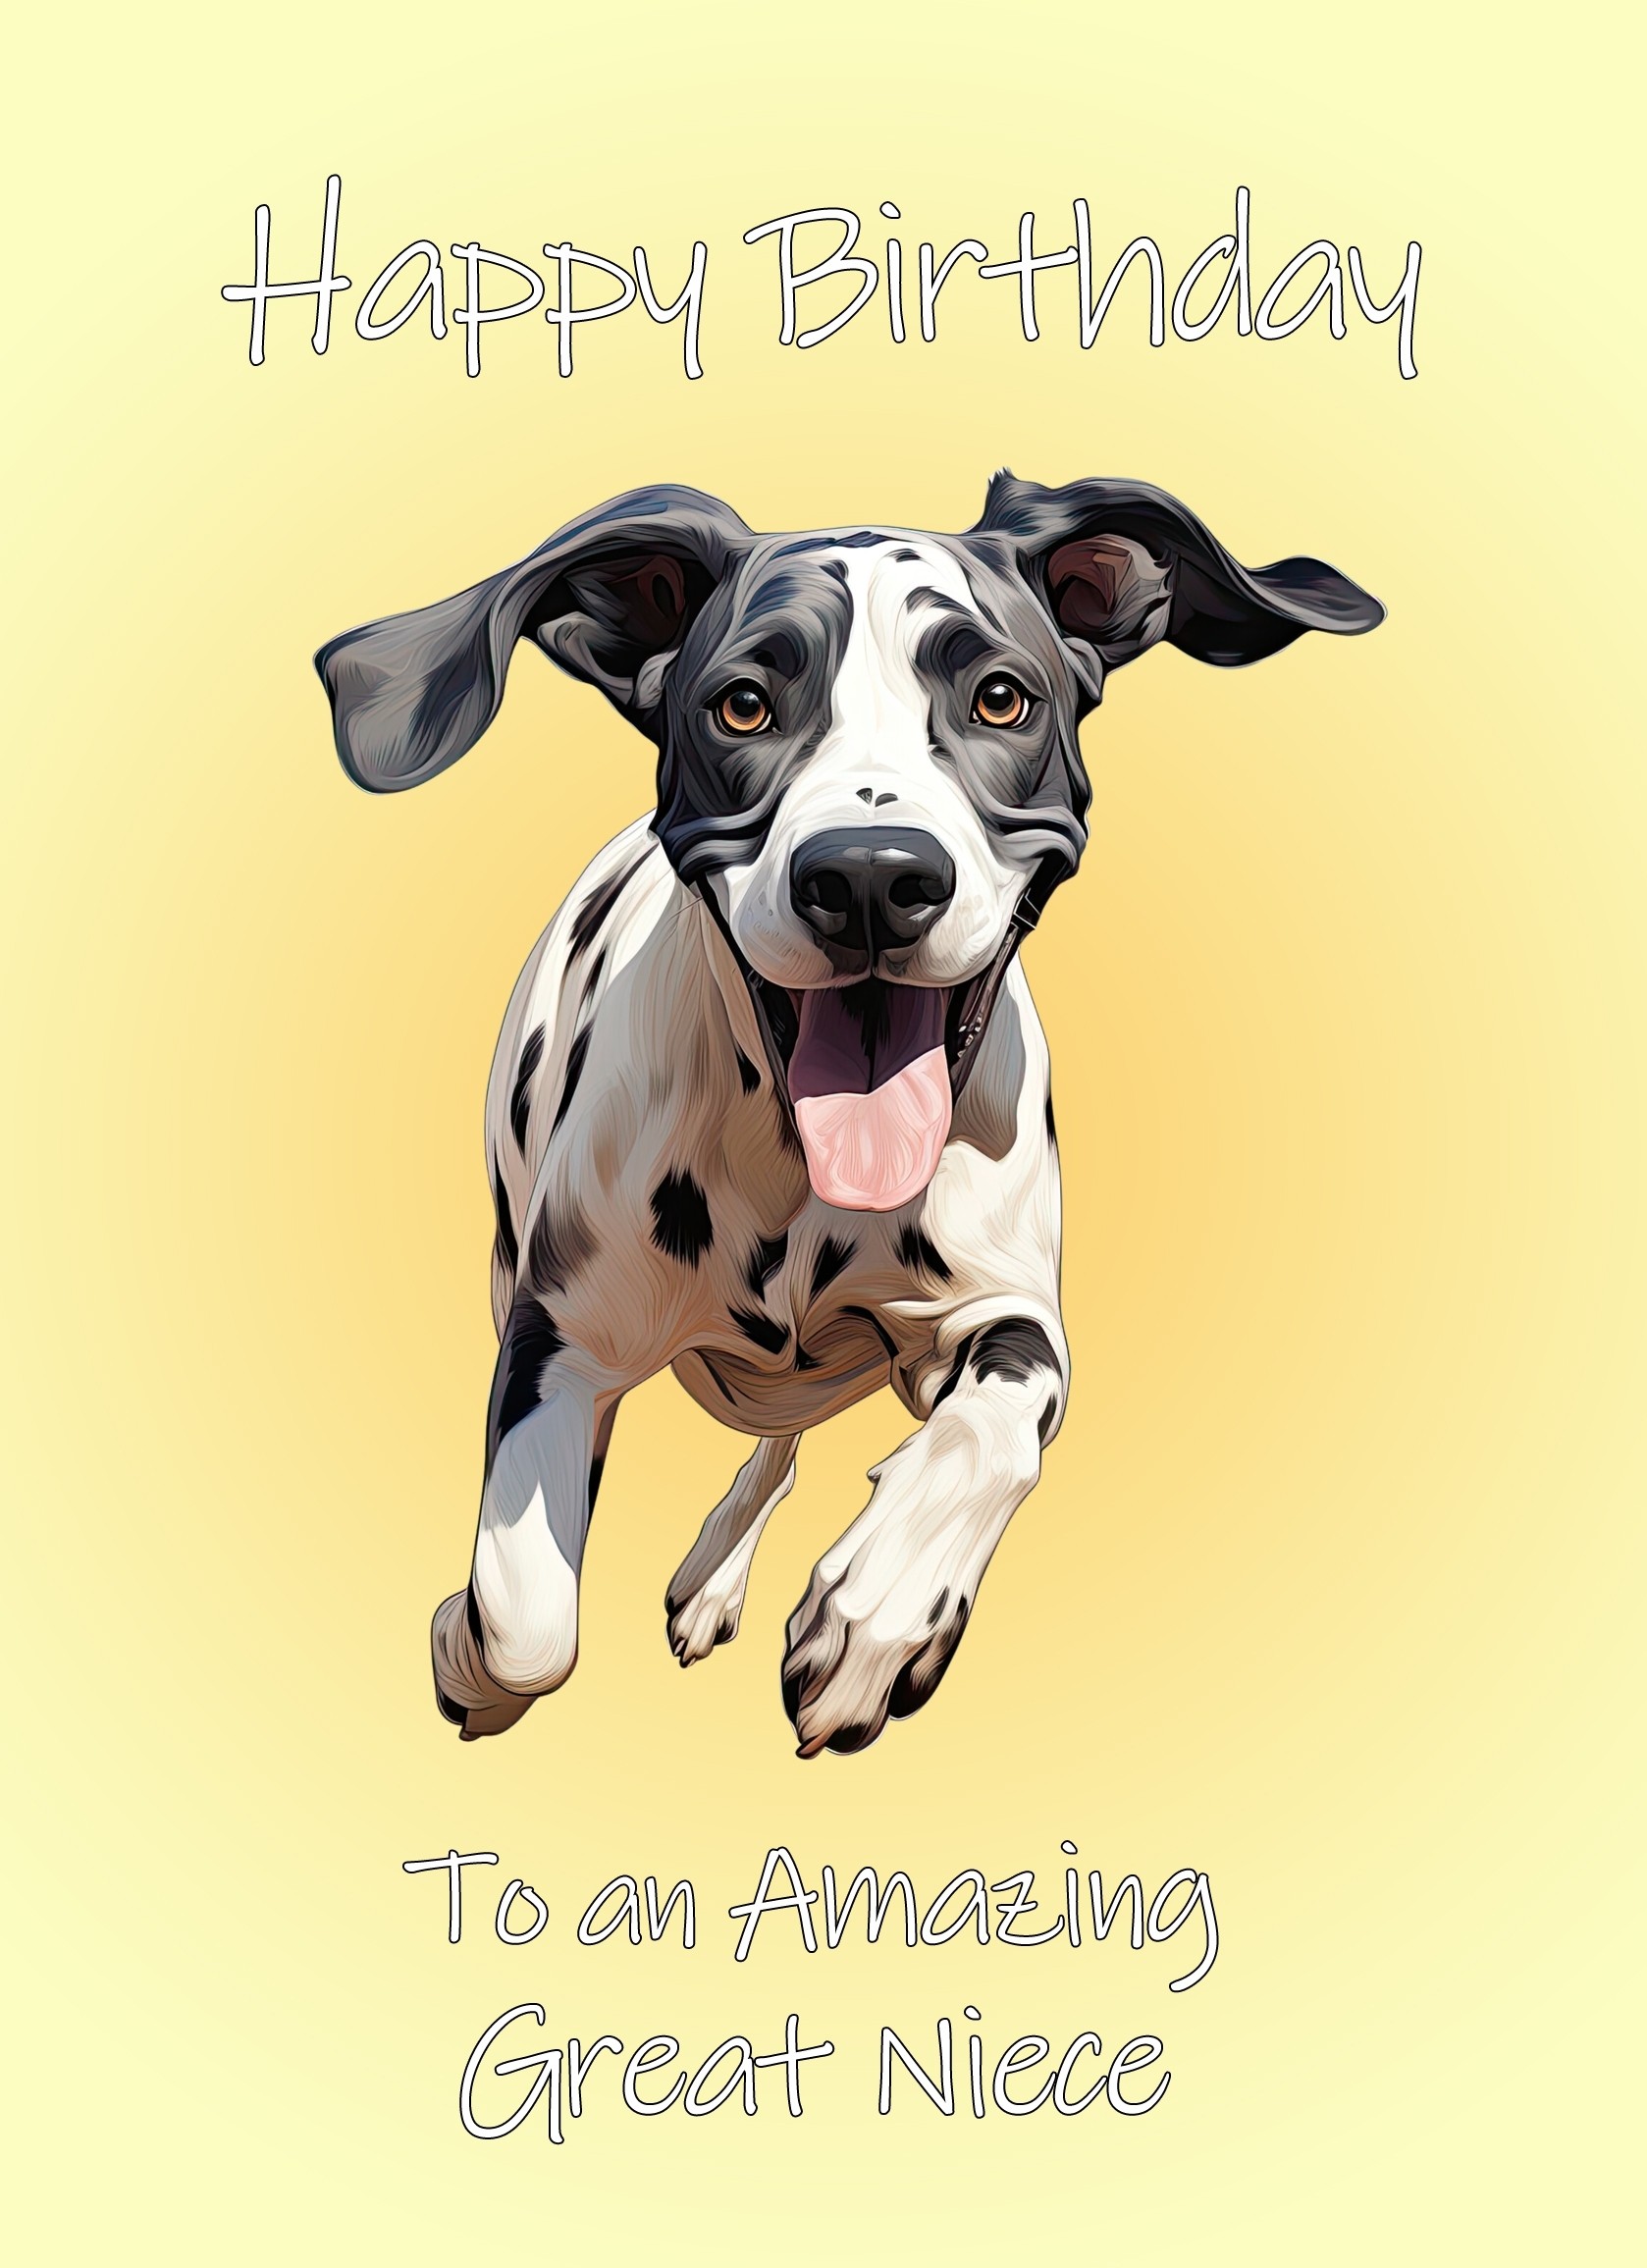 Great Dane Dog Birthday Card For Great Niece